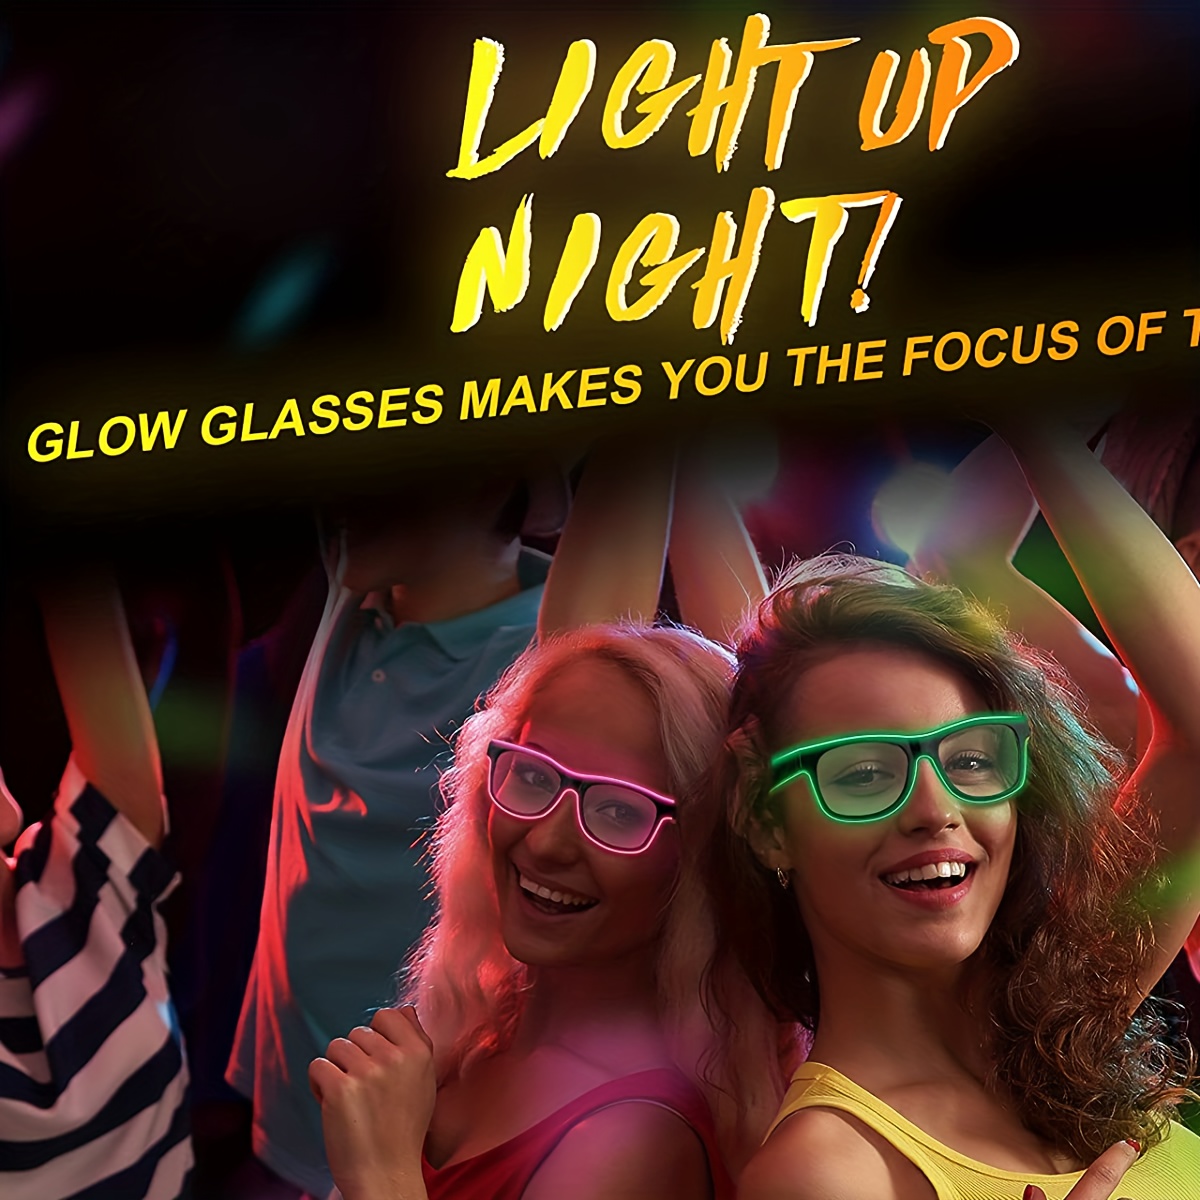 Light Up Shutter LED Glasses Party Eyeglass El Wire Dj Flashing Sunglasses  Costumes Glow In Dark